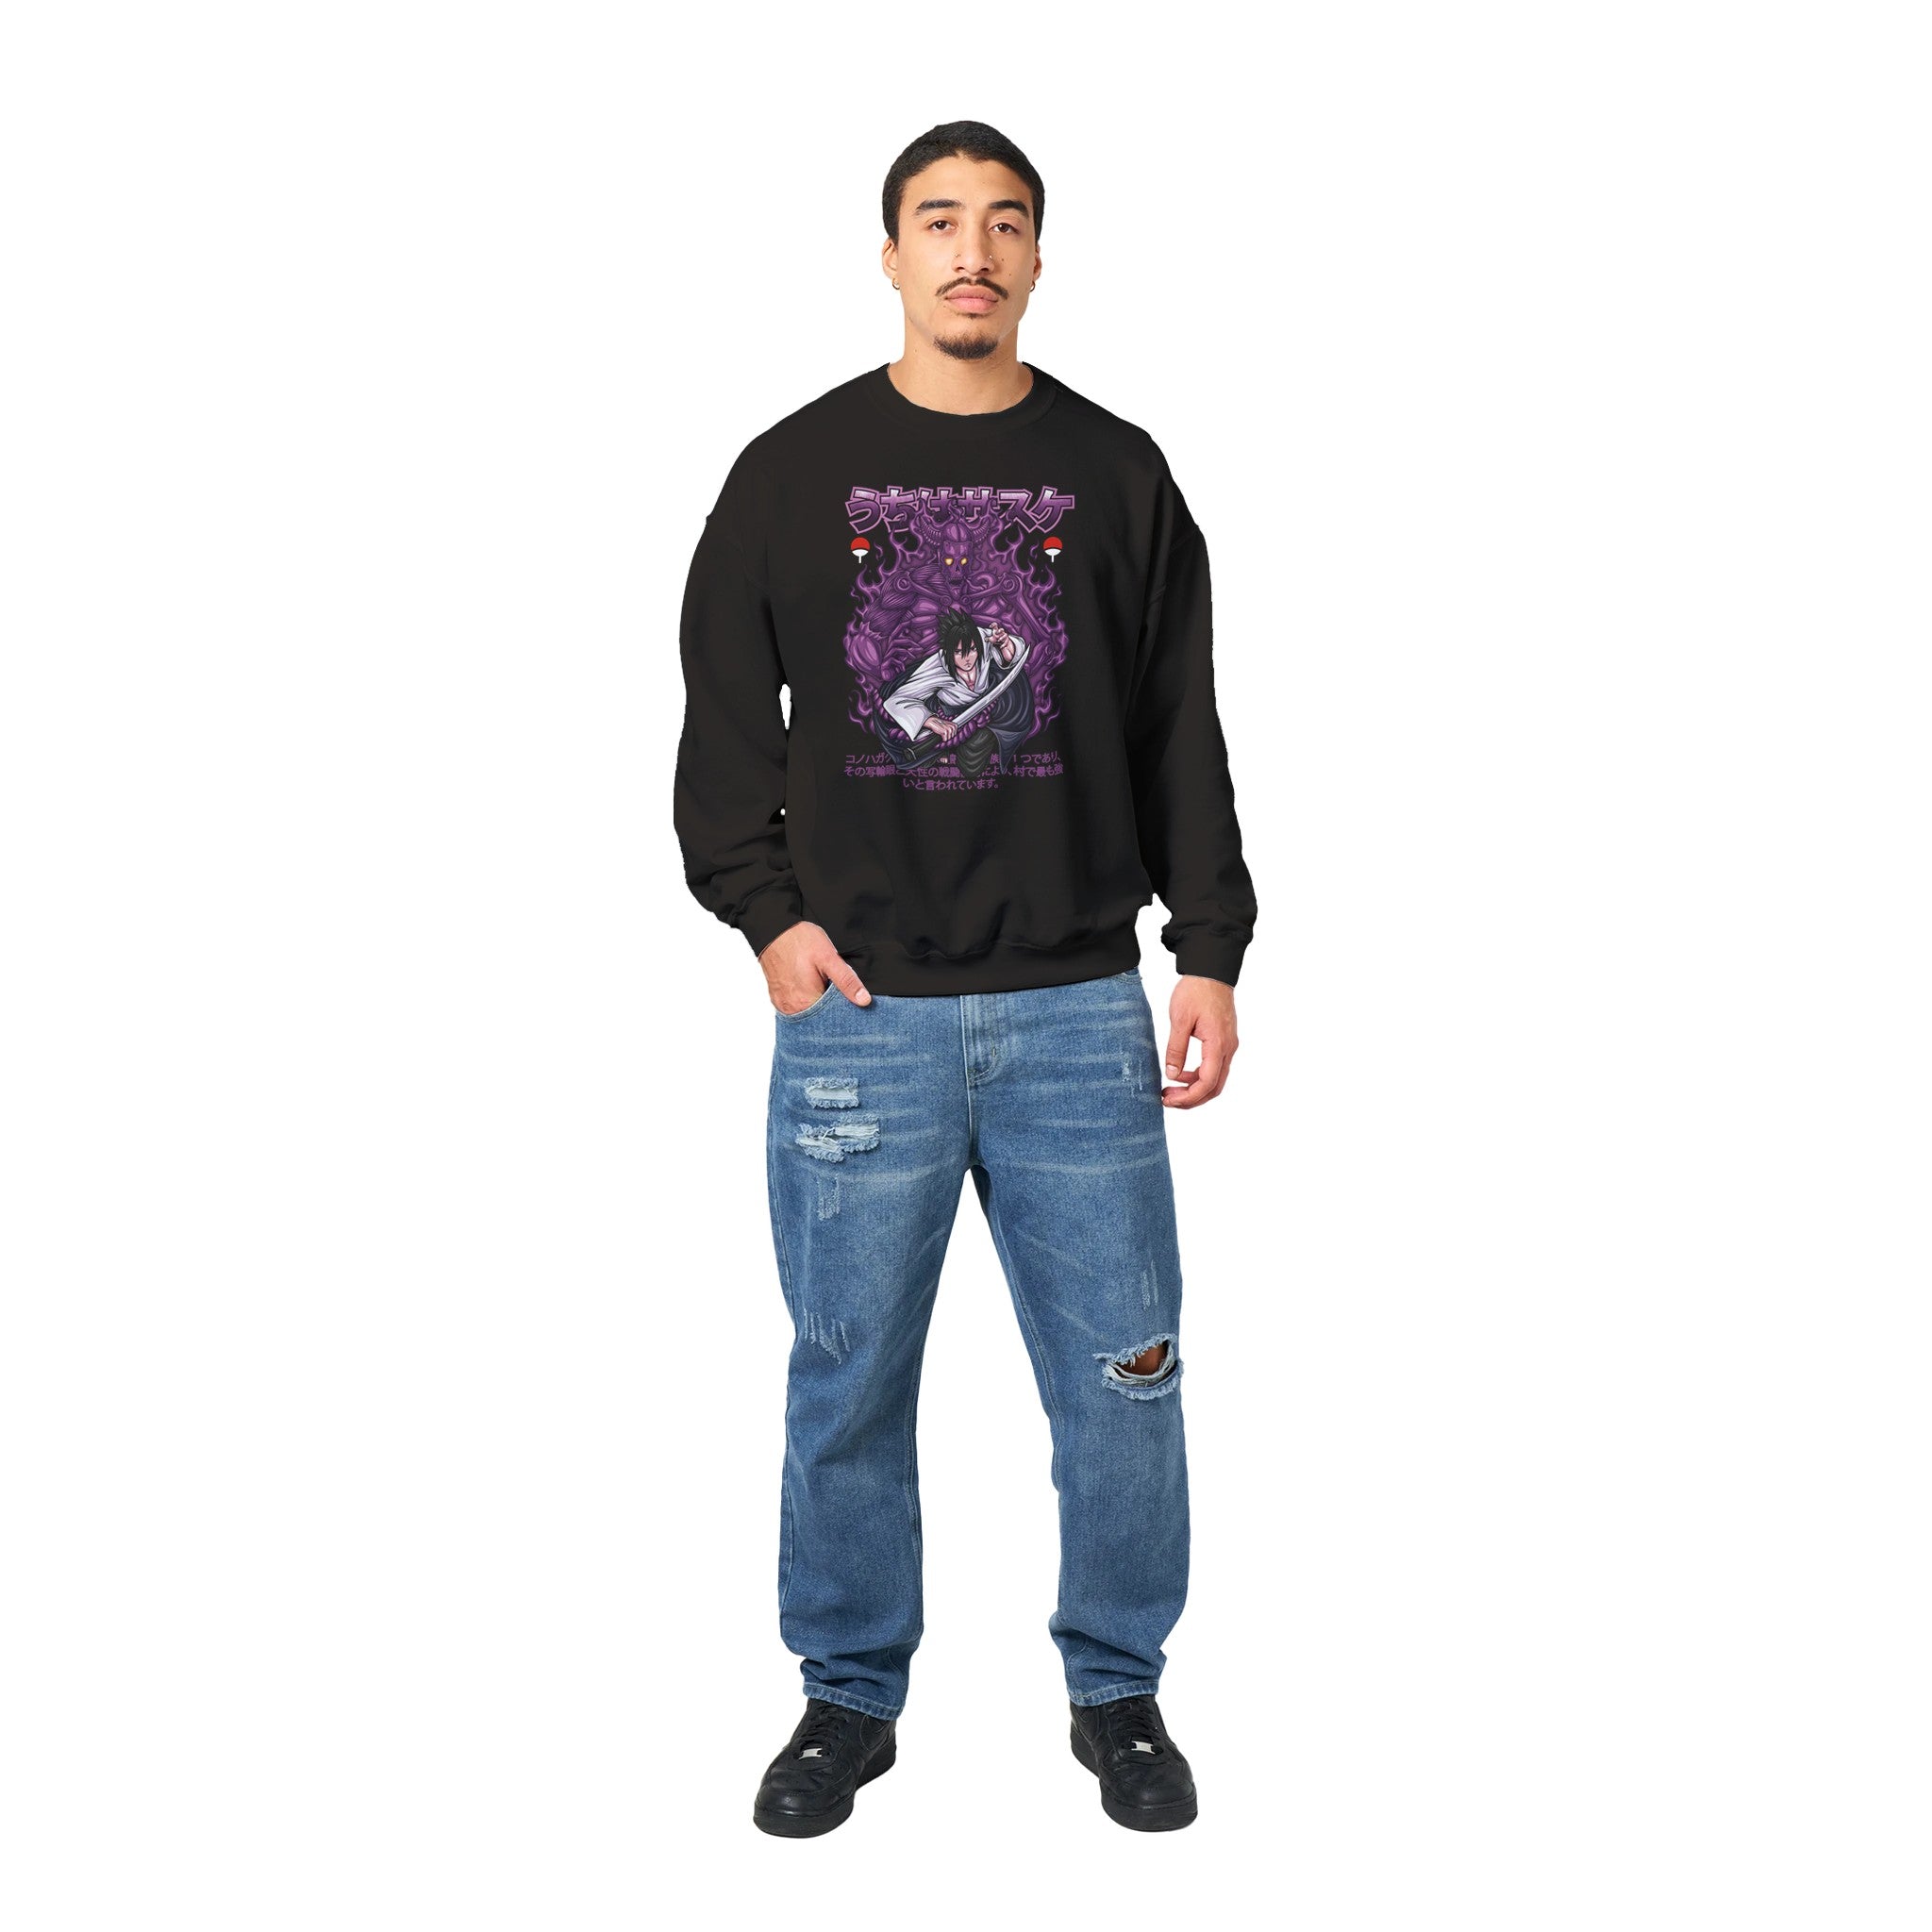 shop and buy naruto sasuke uchiha anime clothing sweatshirt/jumper